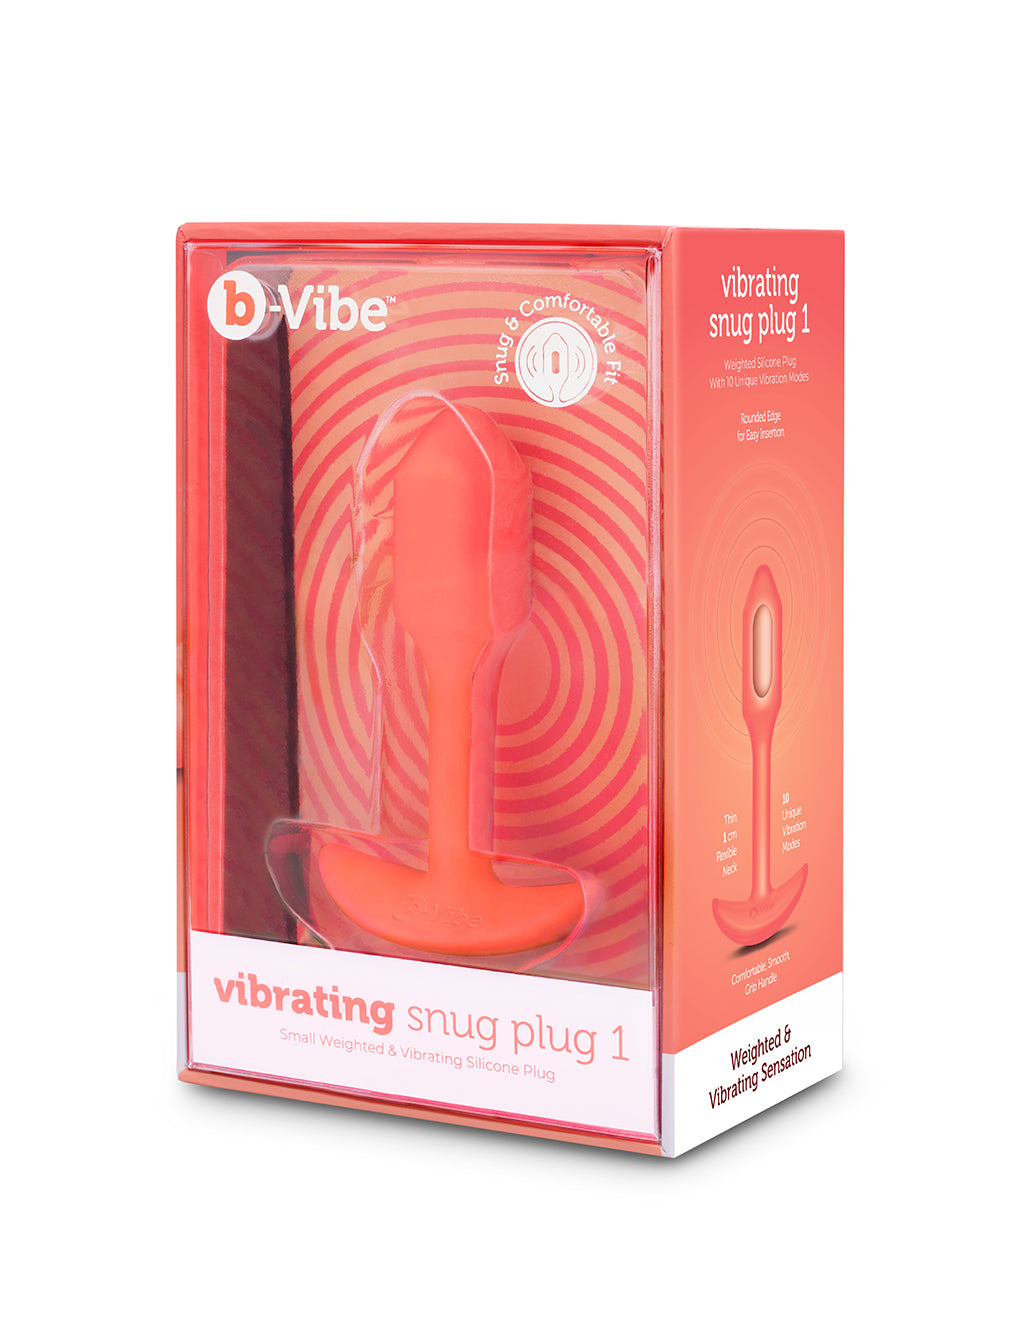 B-Vibe Vibrating Snug Plug 1 Small- Package